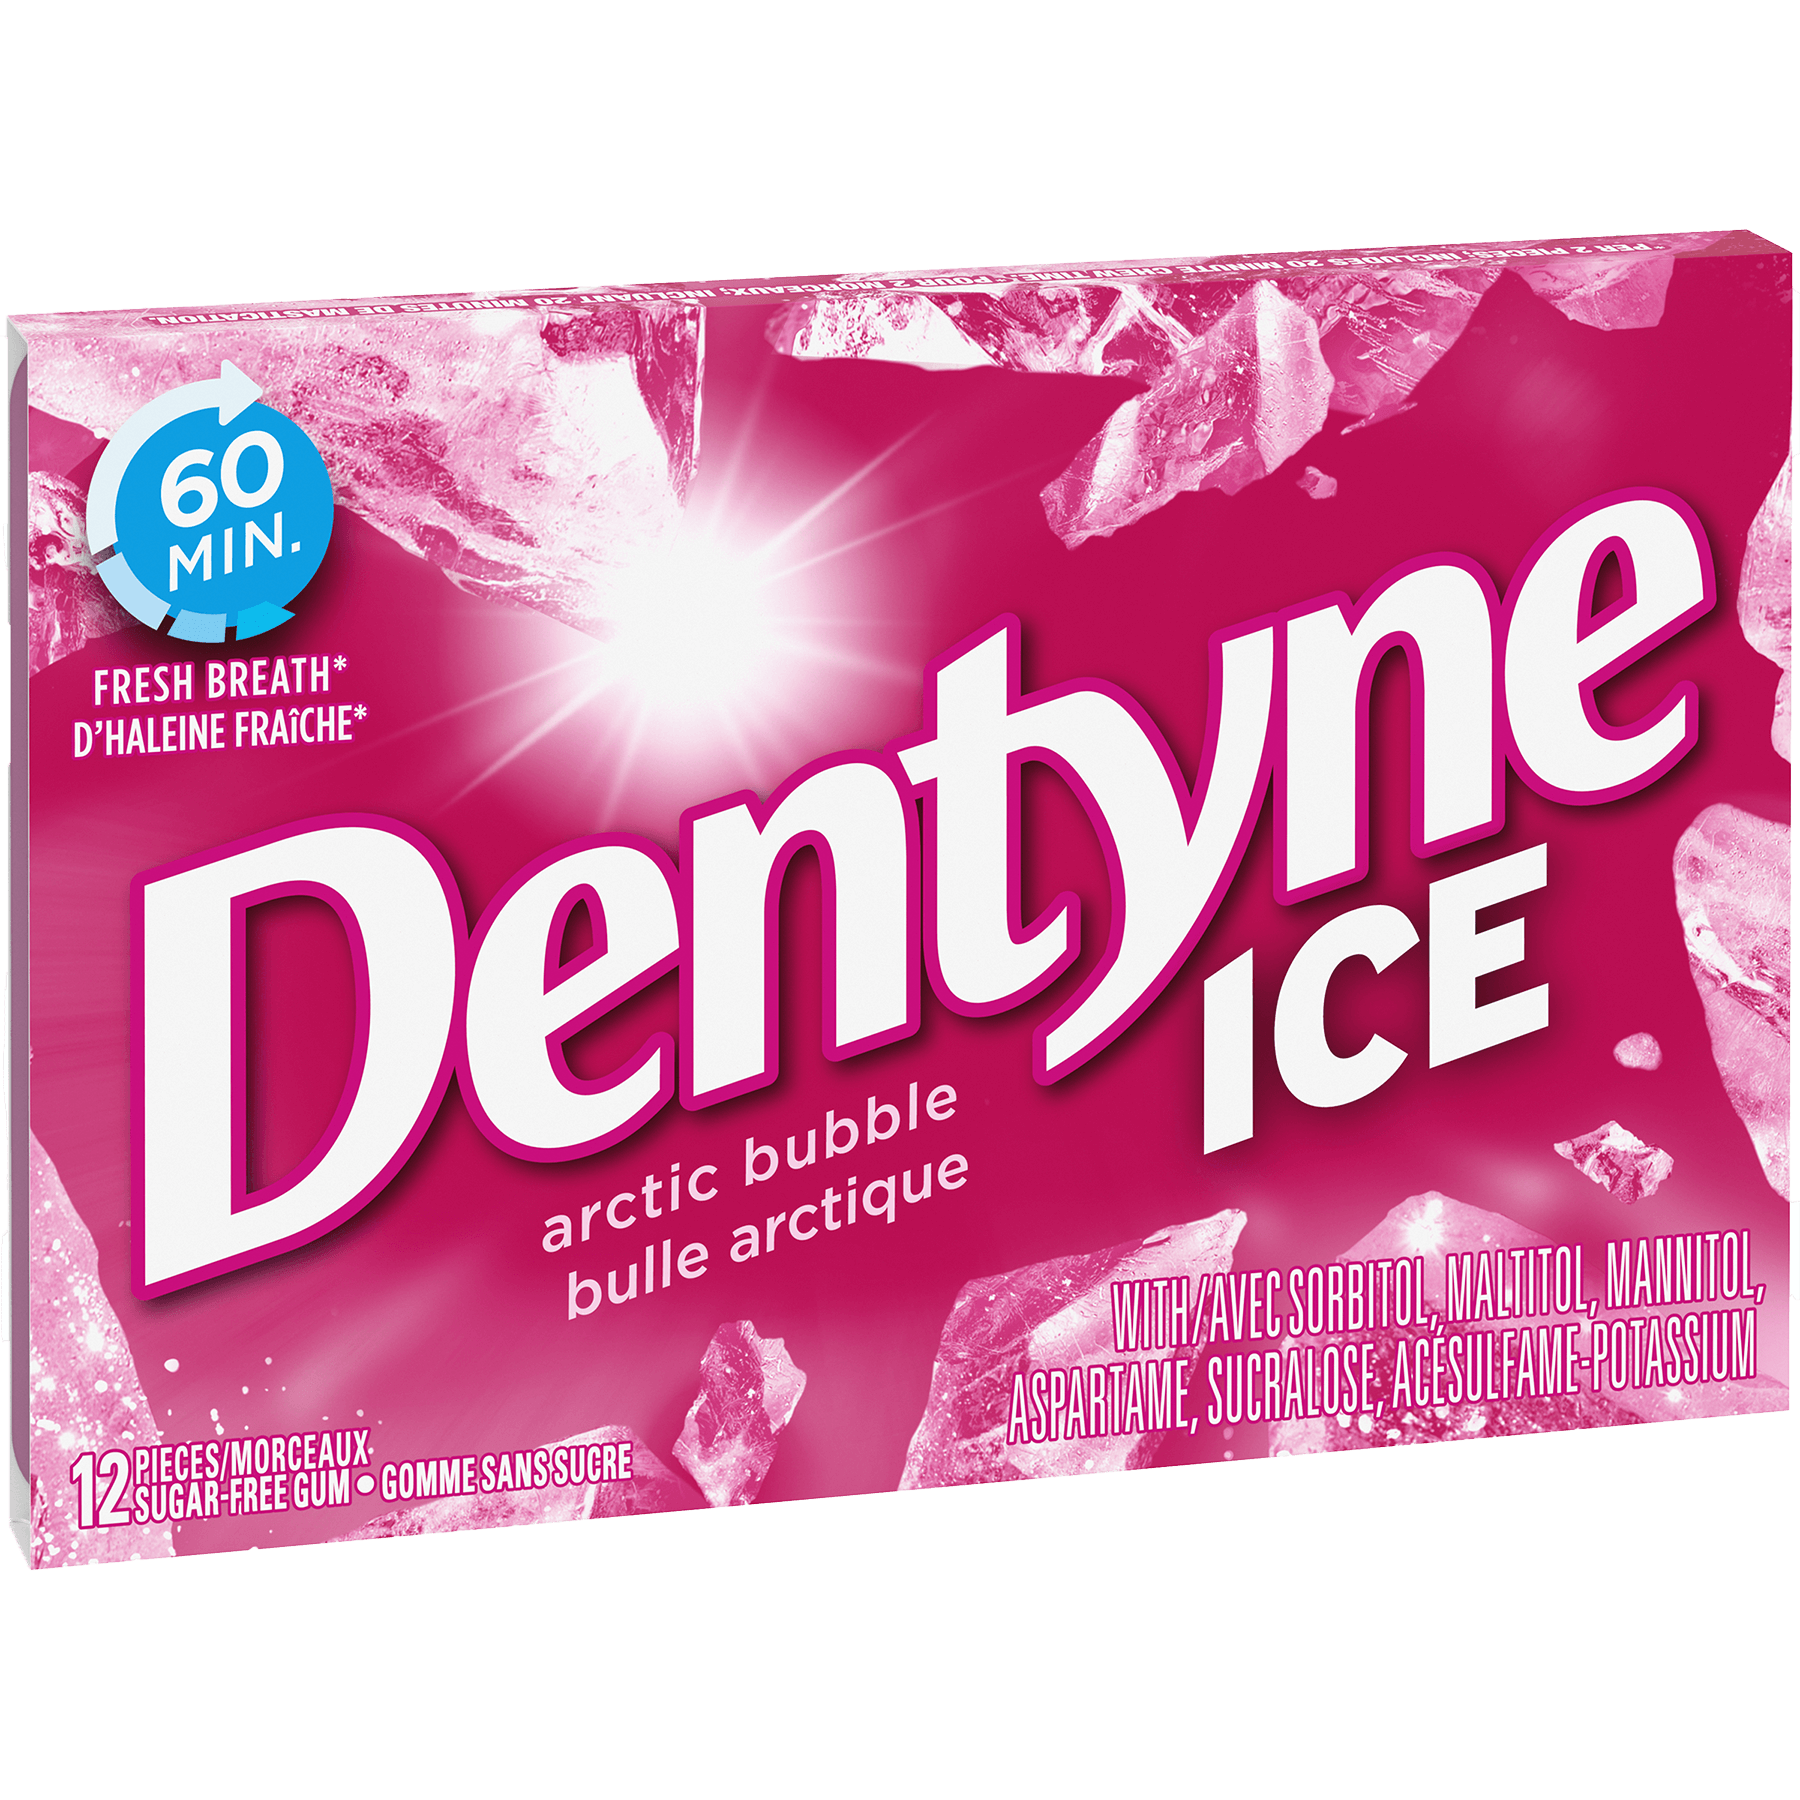 Dentyne ICE Bulle Arctique